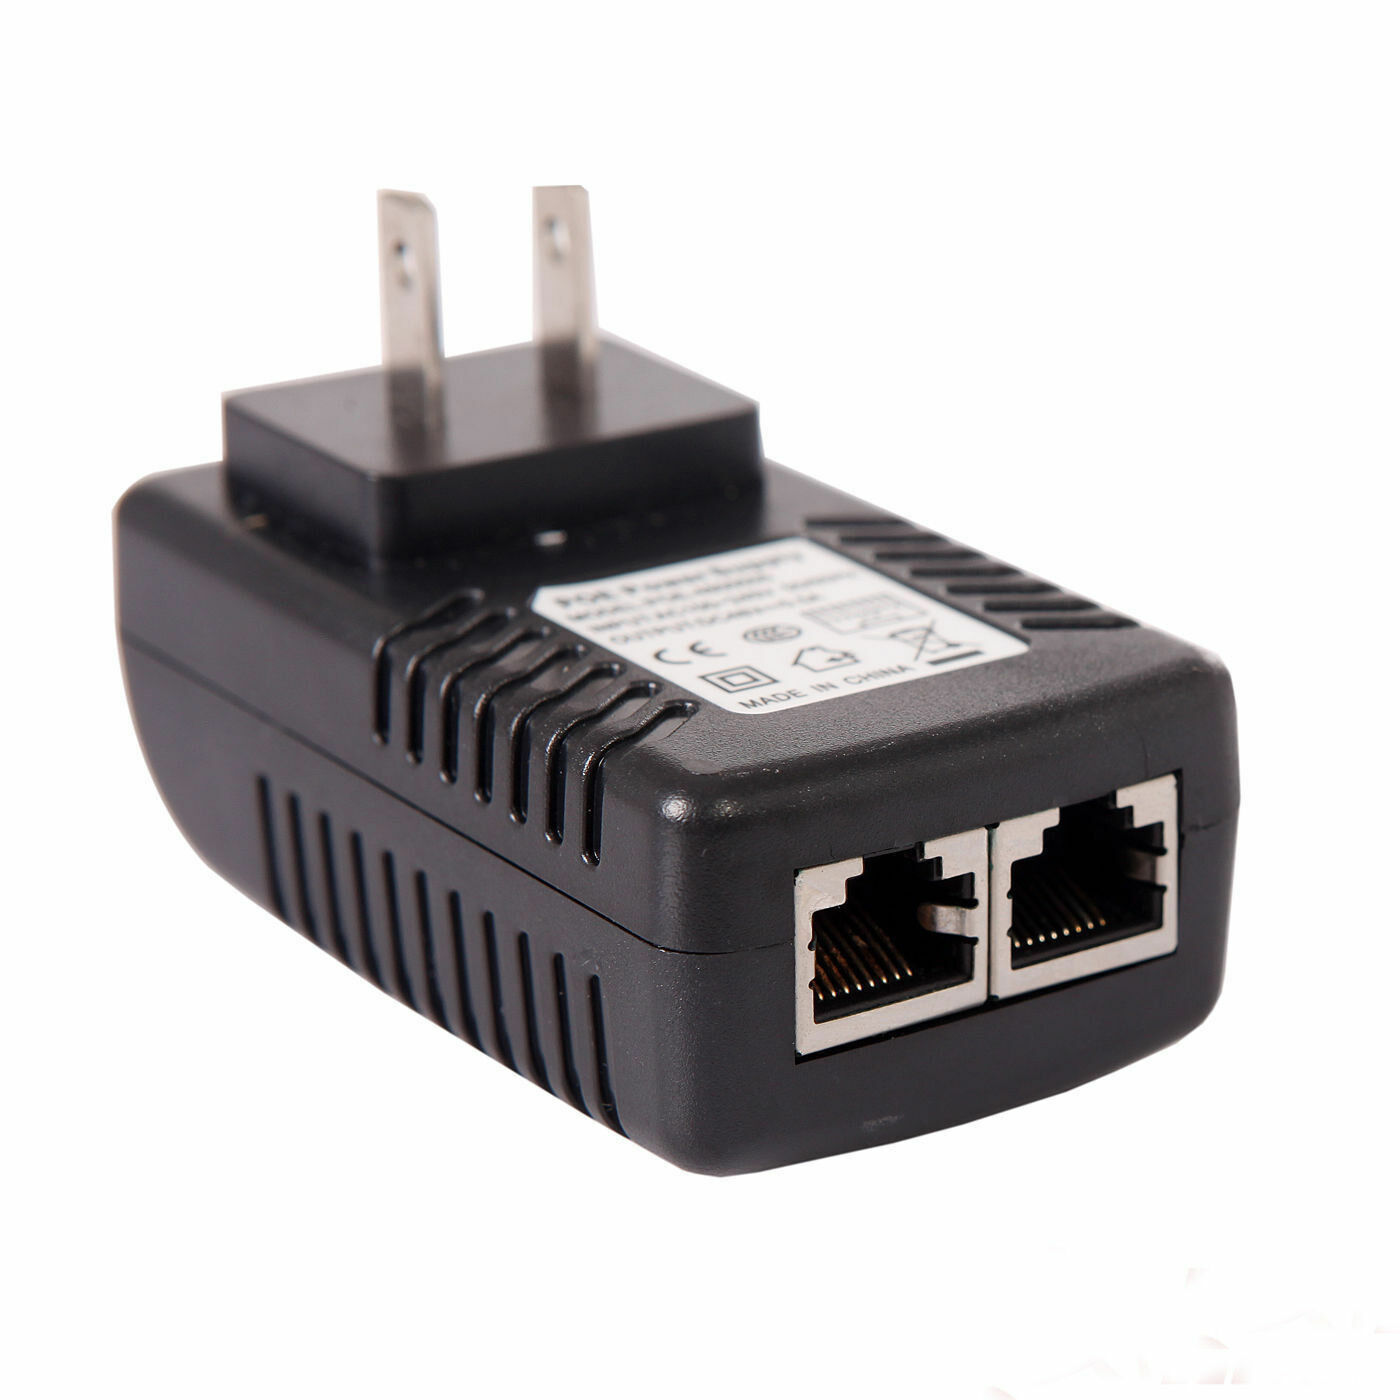 NEW 48V Power Supply PoE Injector Adapter for Cisco Polycom Avaya Mitel IP Phone